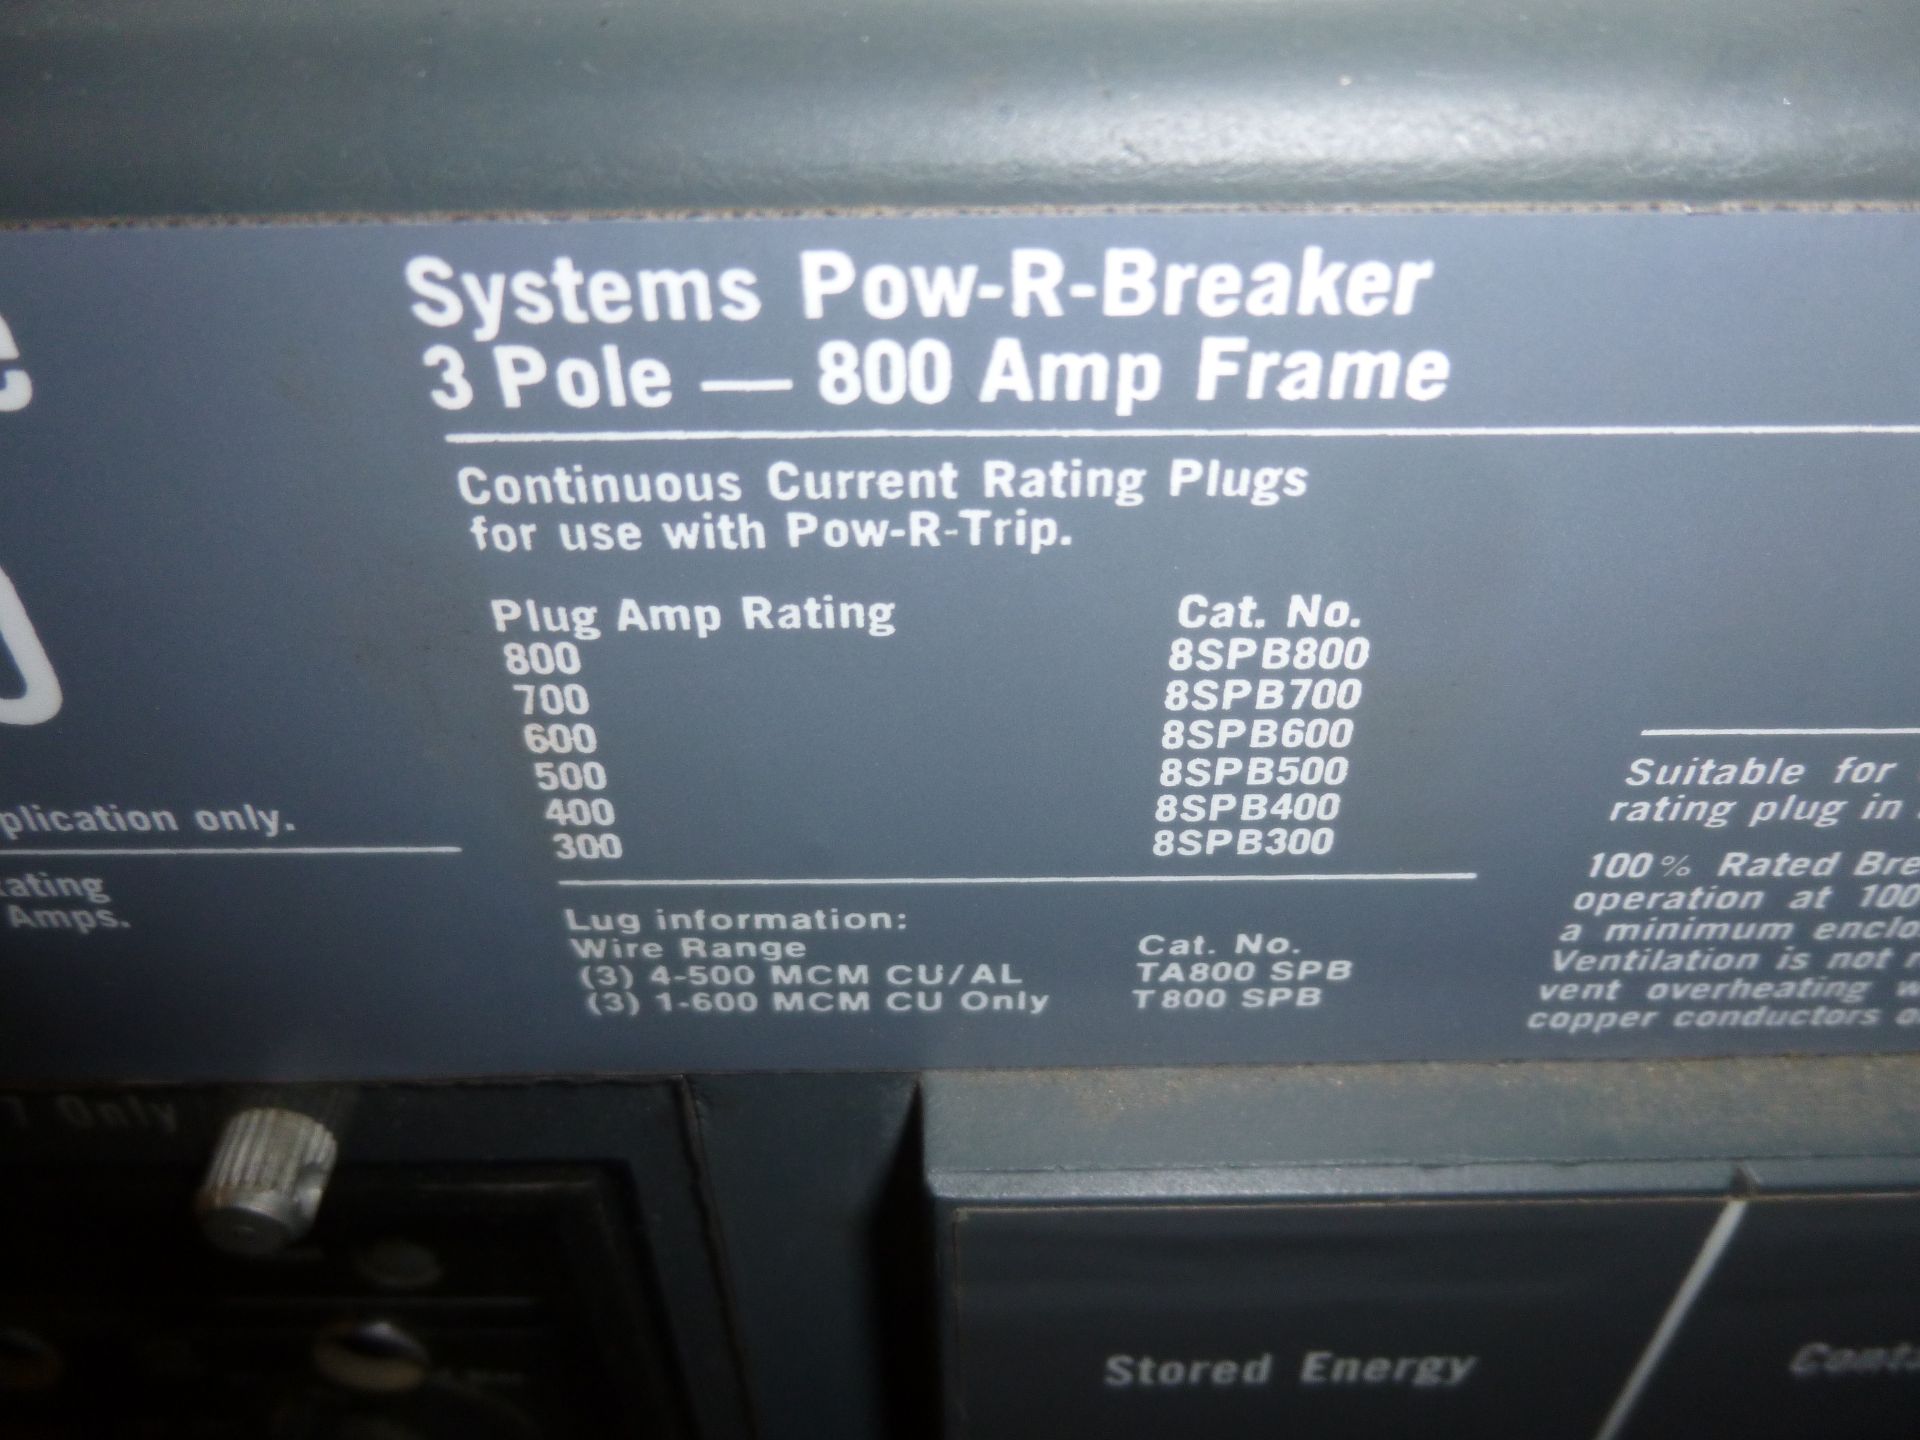 Westinghouse SPB50 systems Pow-R-Breaker, 3-pole, 800amp frame - Image 3 of 3